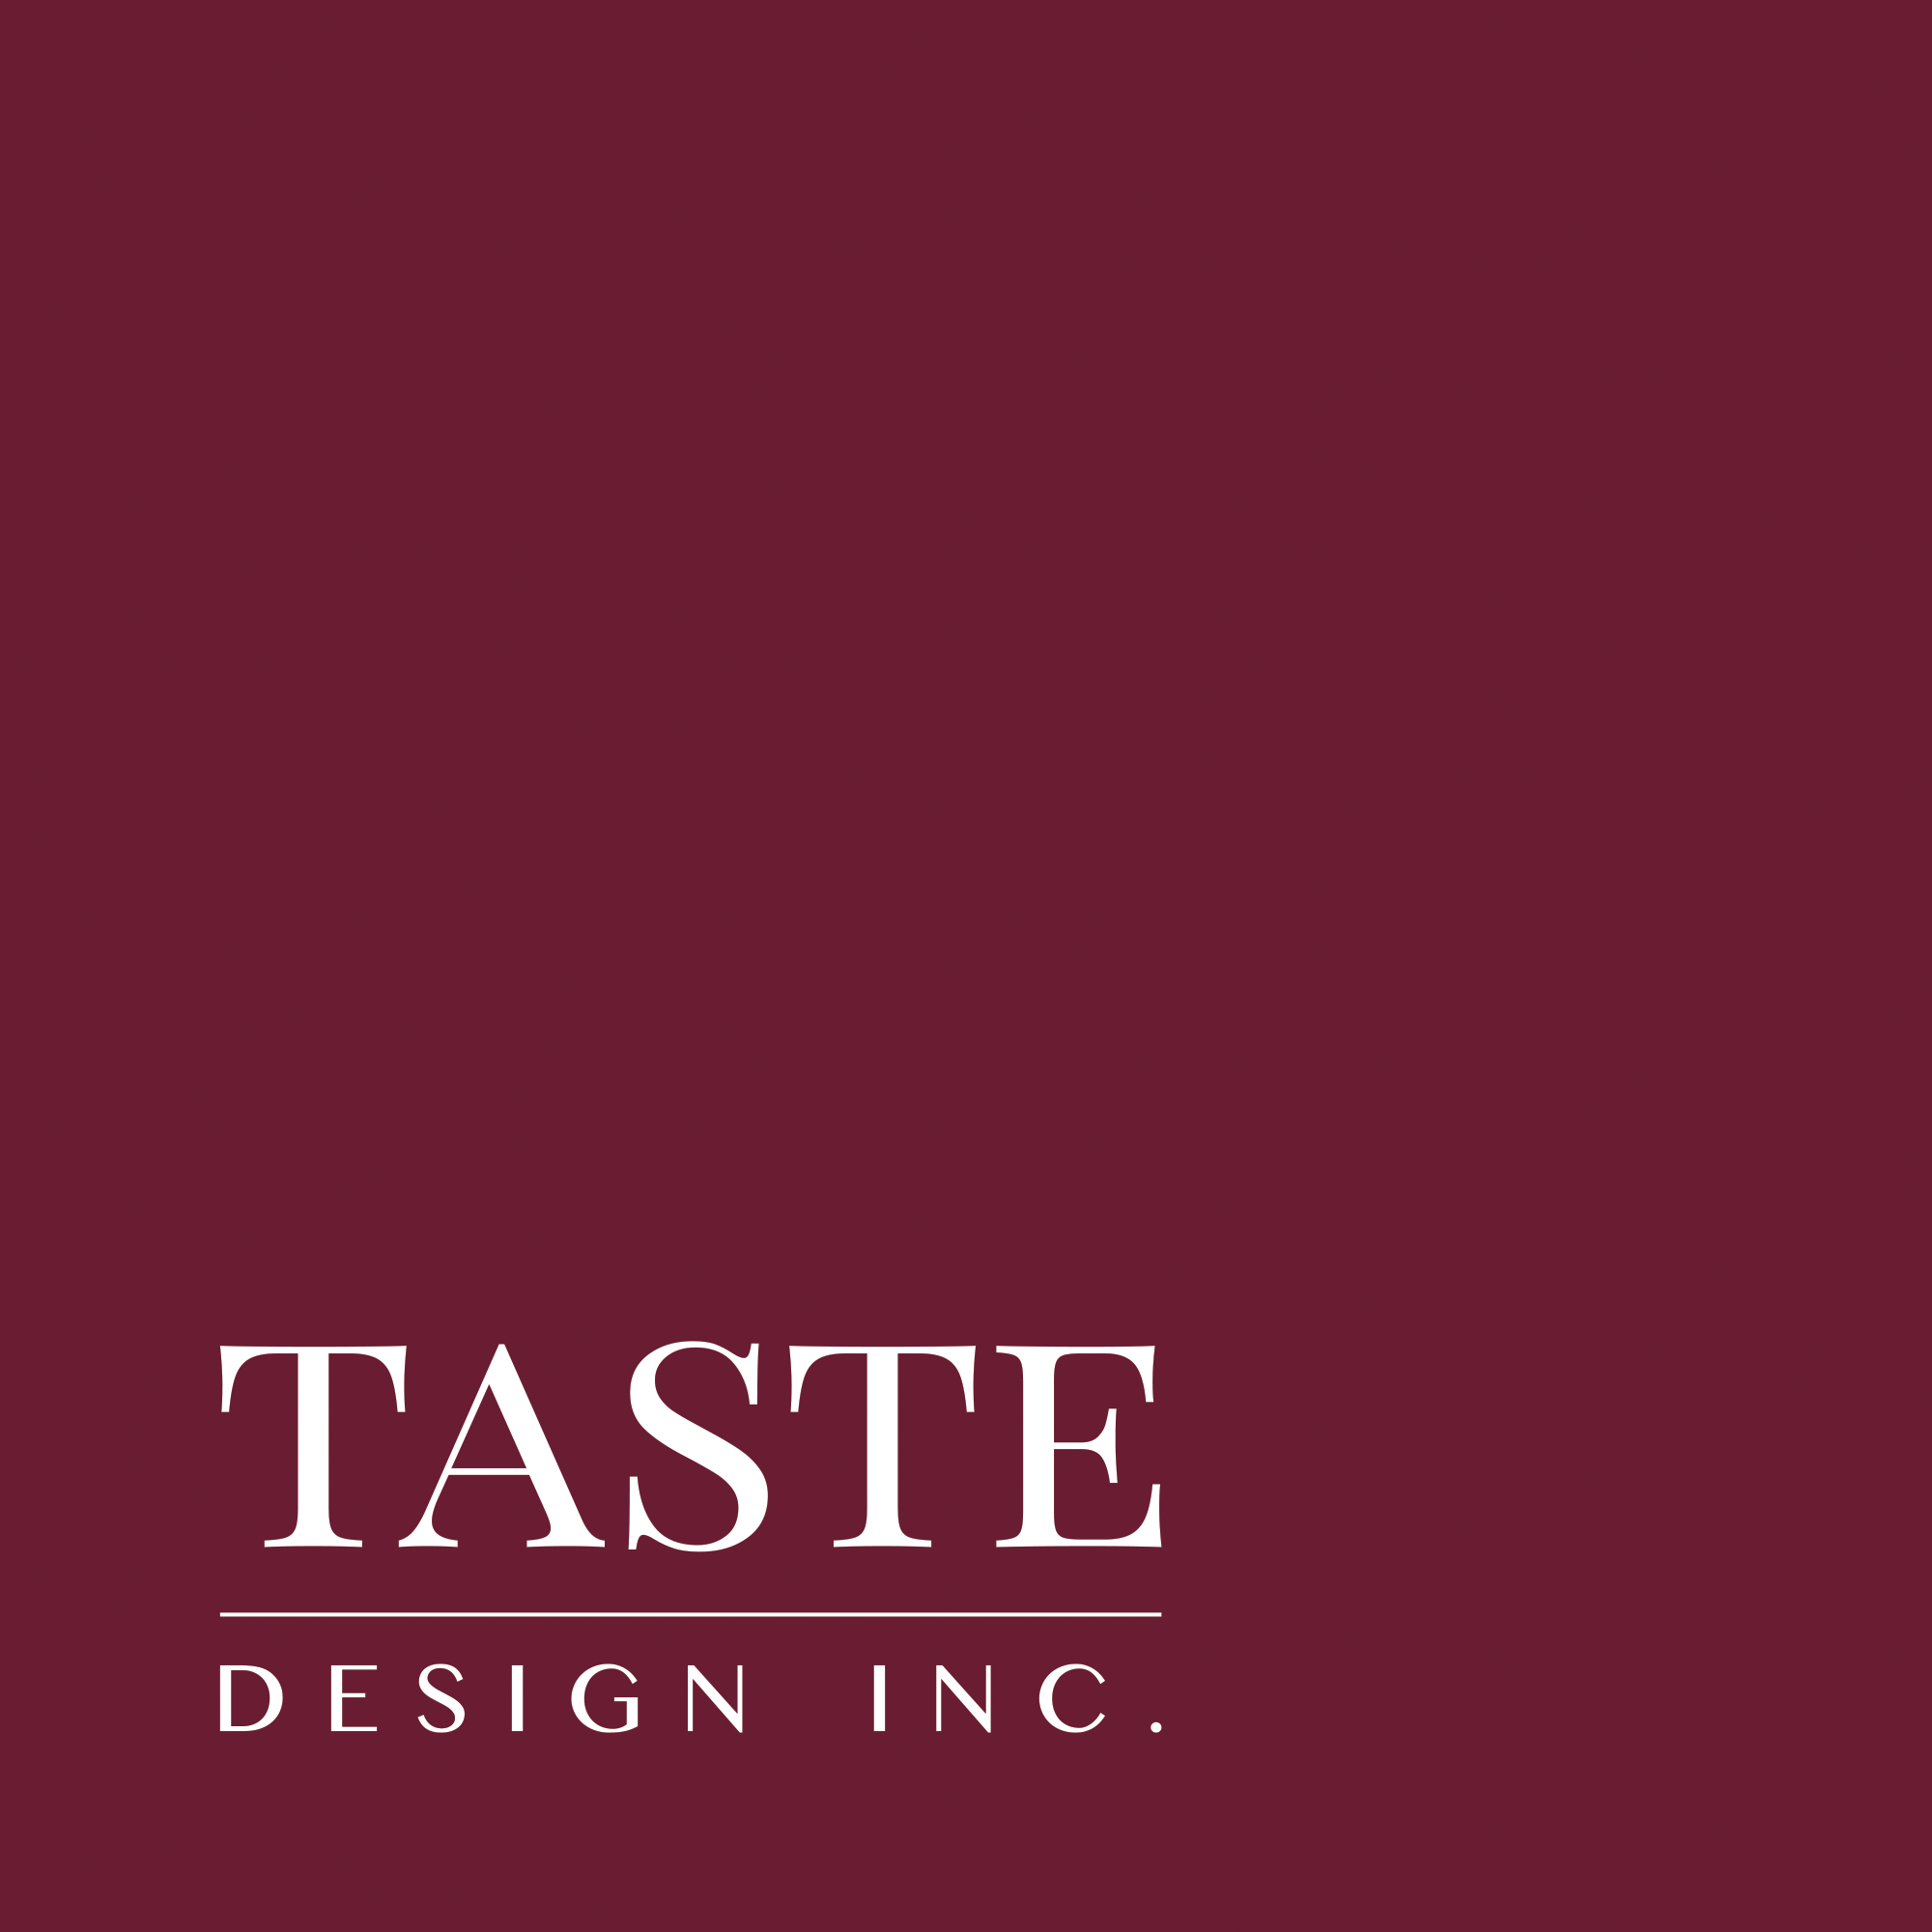 taste-logo-block-pms 7421 c.png